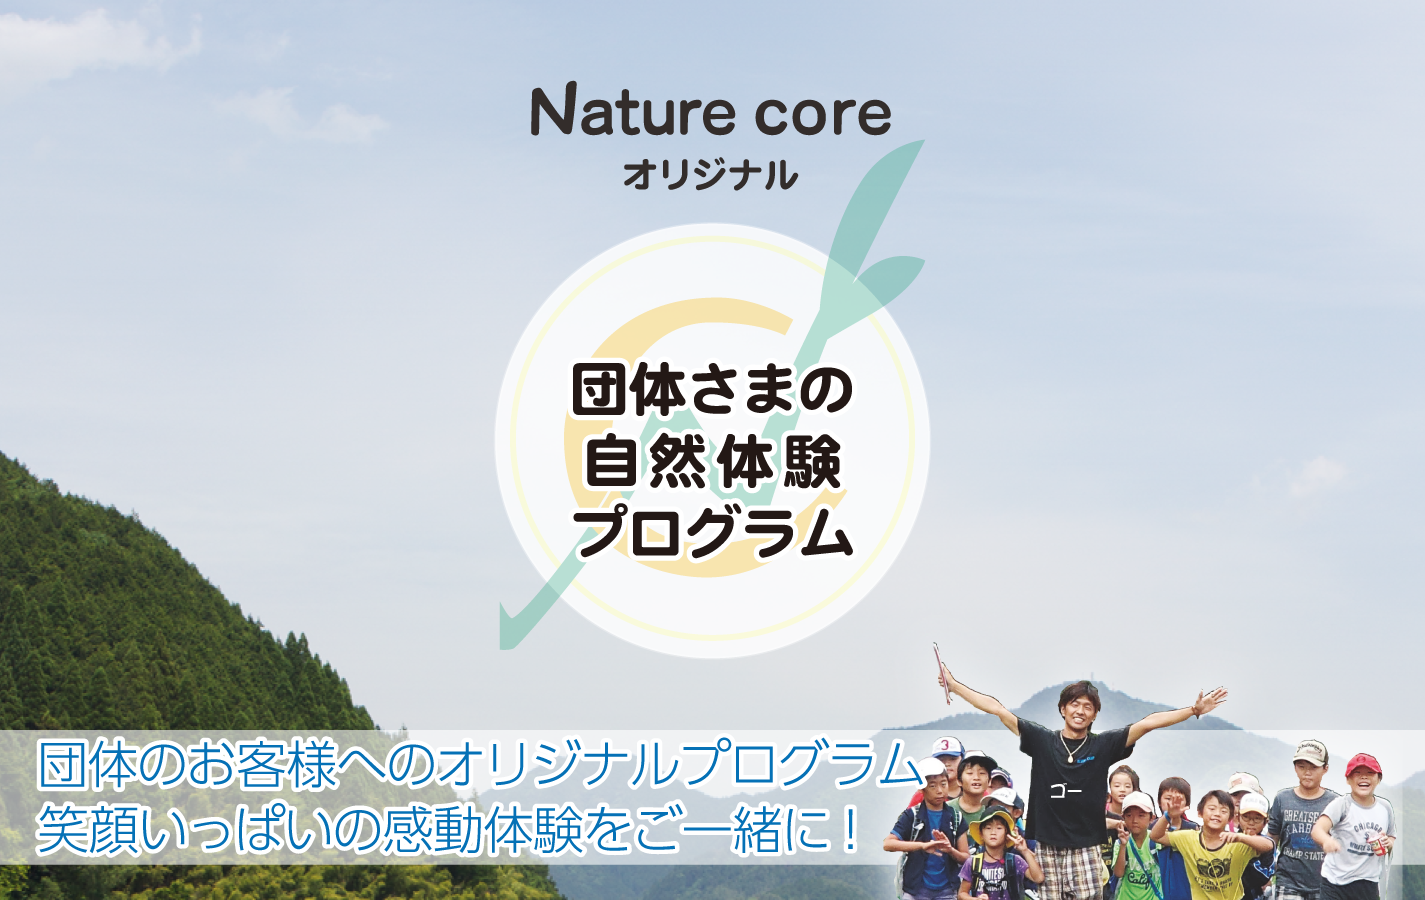 Naturecoreオリジナル団体様の自然体験プログラム